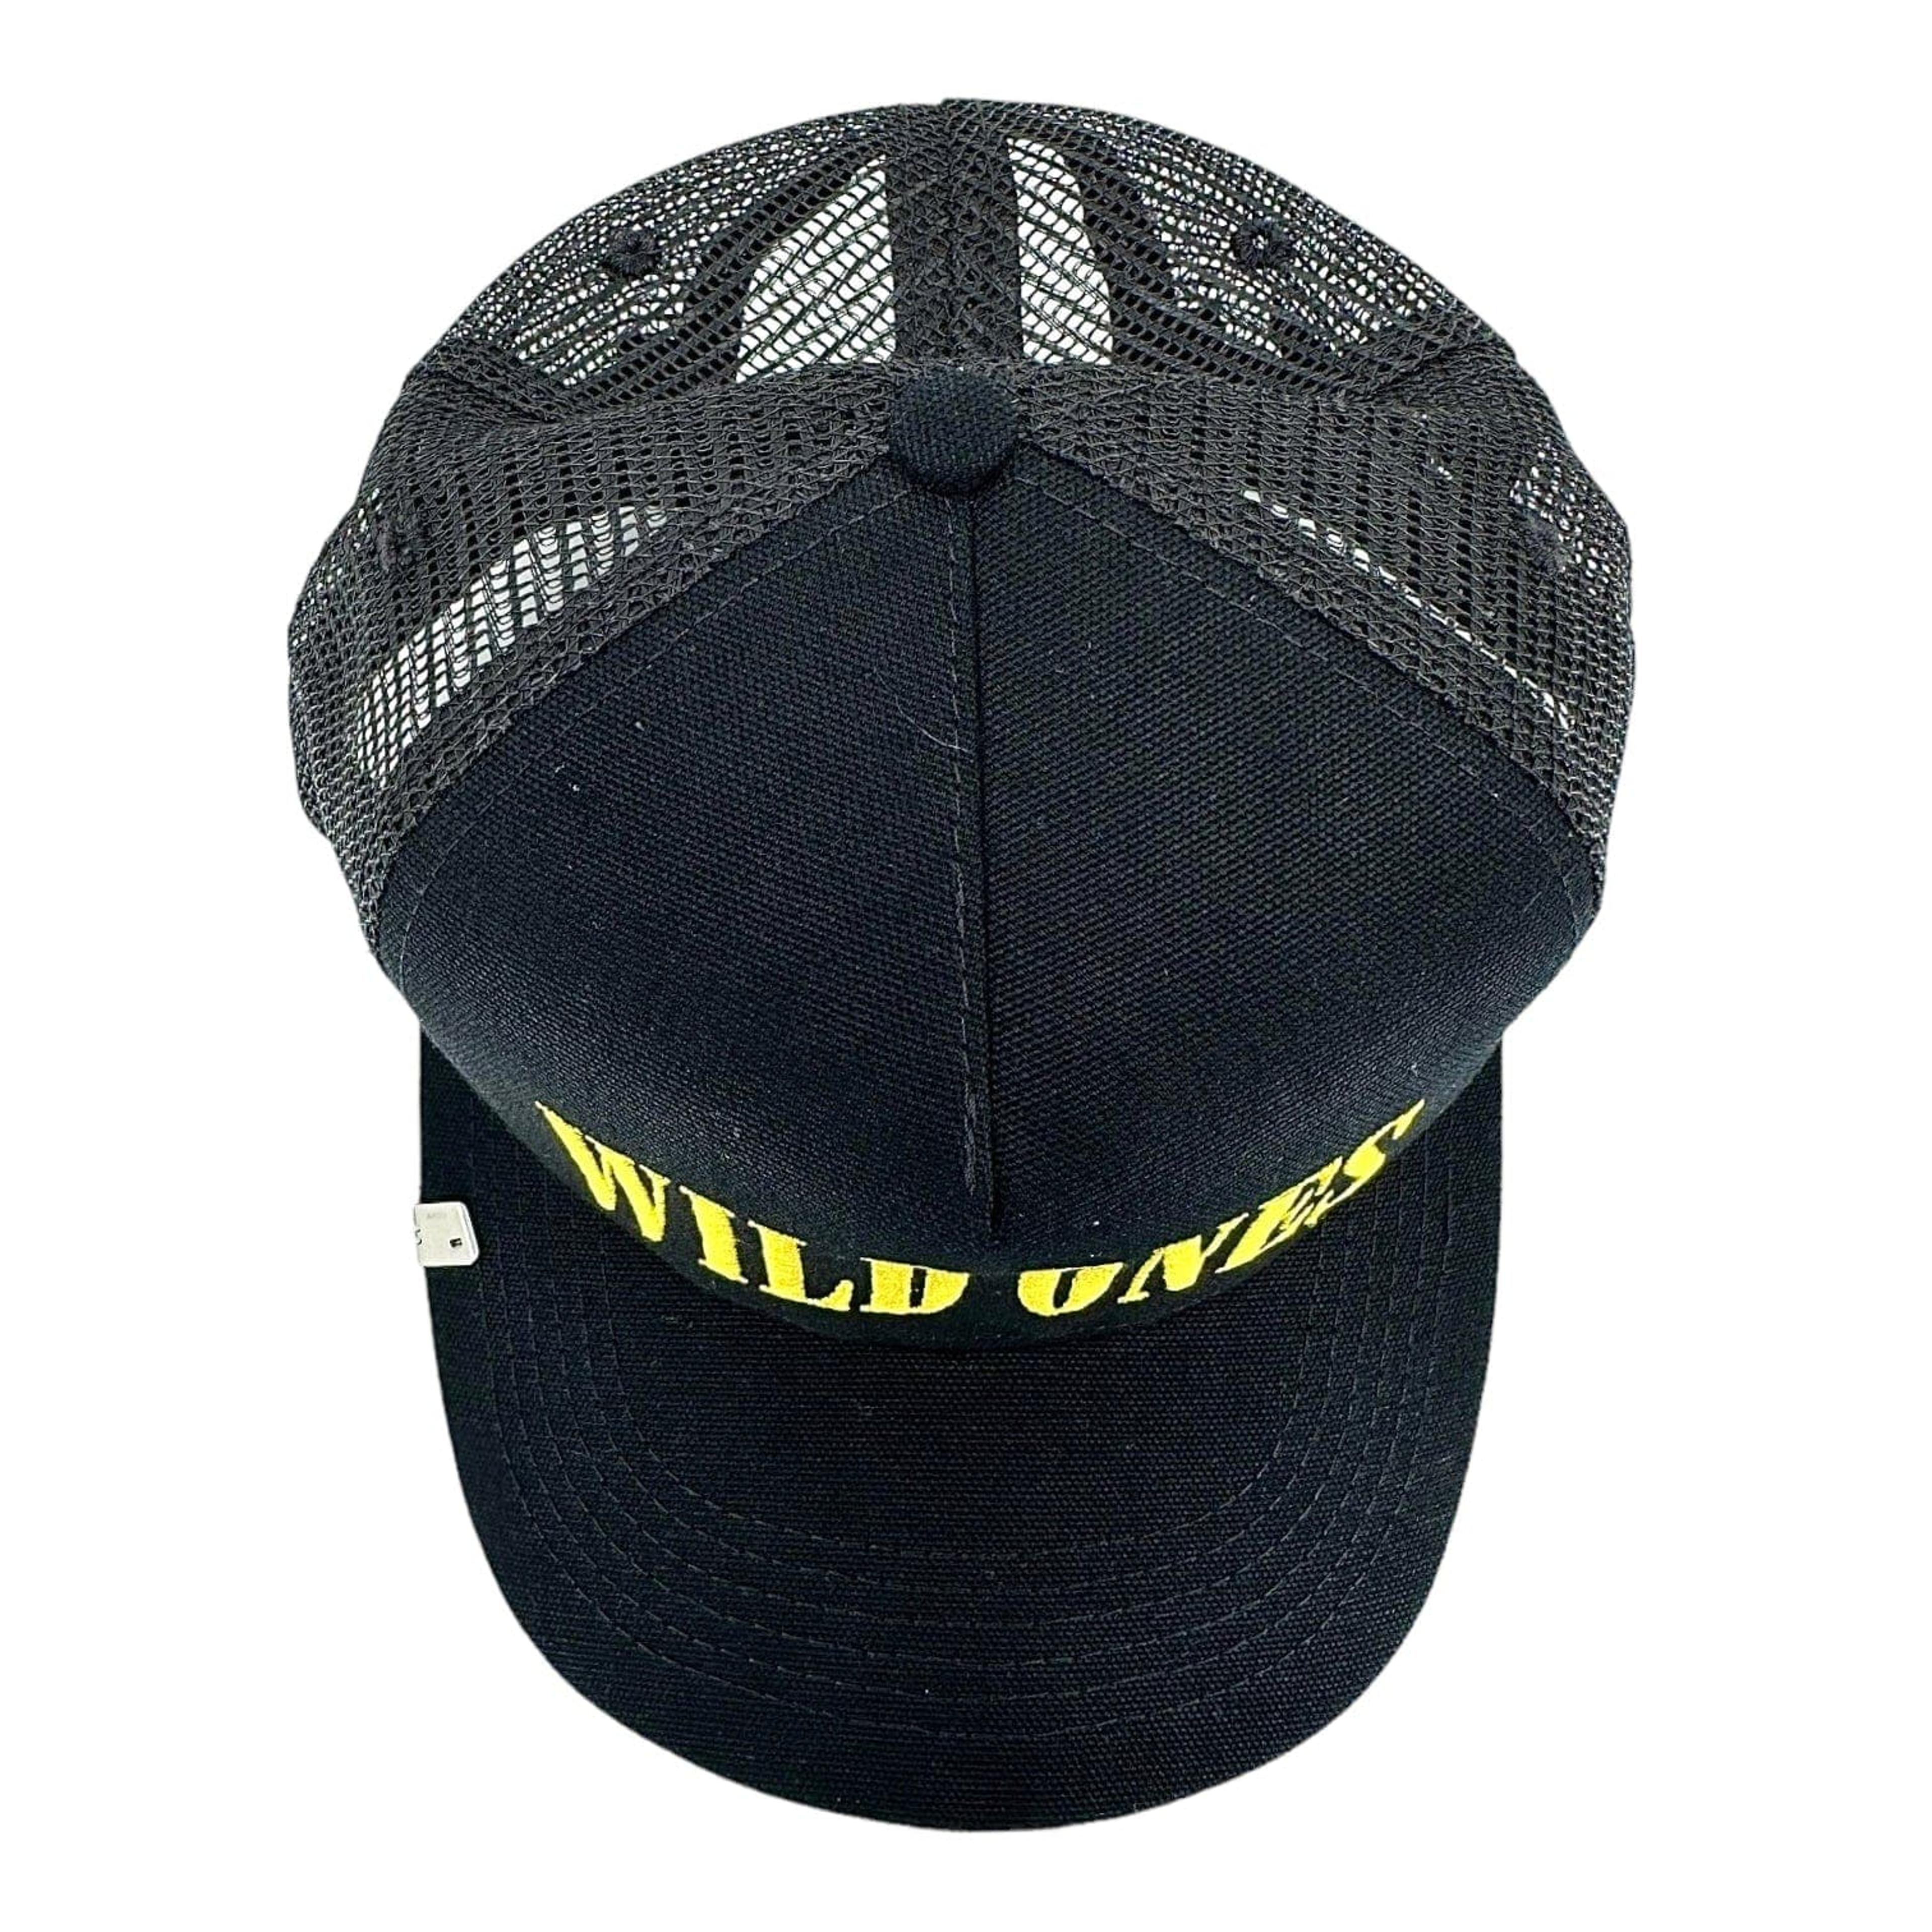 Alternate View 4 of Amiri Wild Ones Trucker Hat Black Yellow Pre-Owned